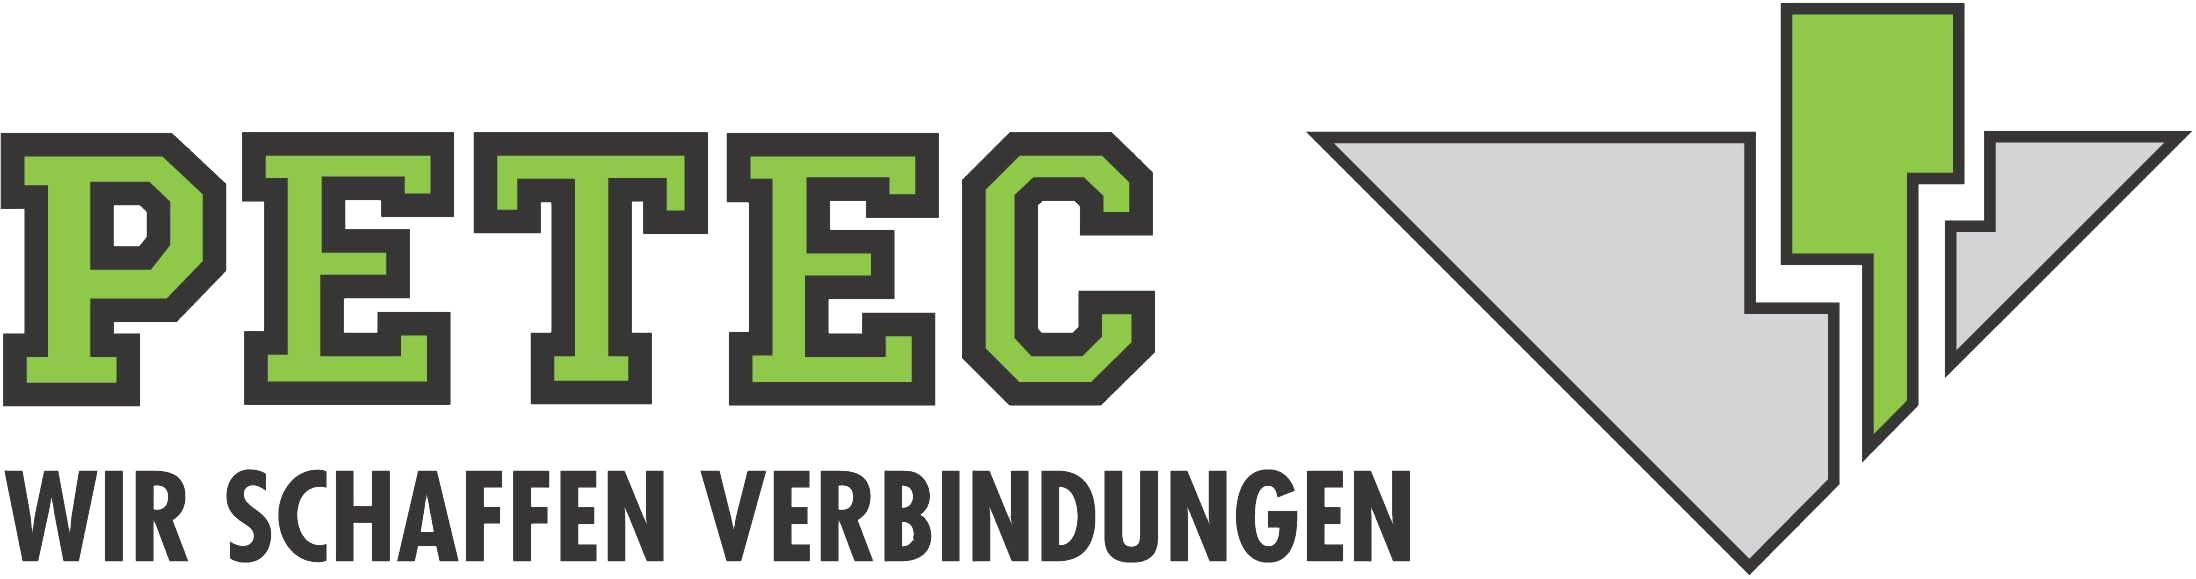 Petec Verbindungstechnik GmbH Logo 